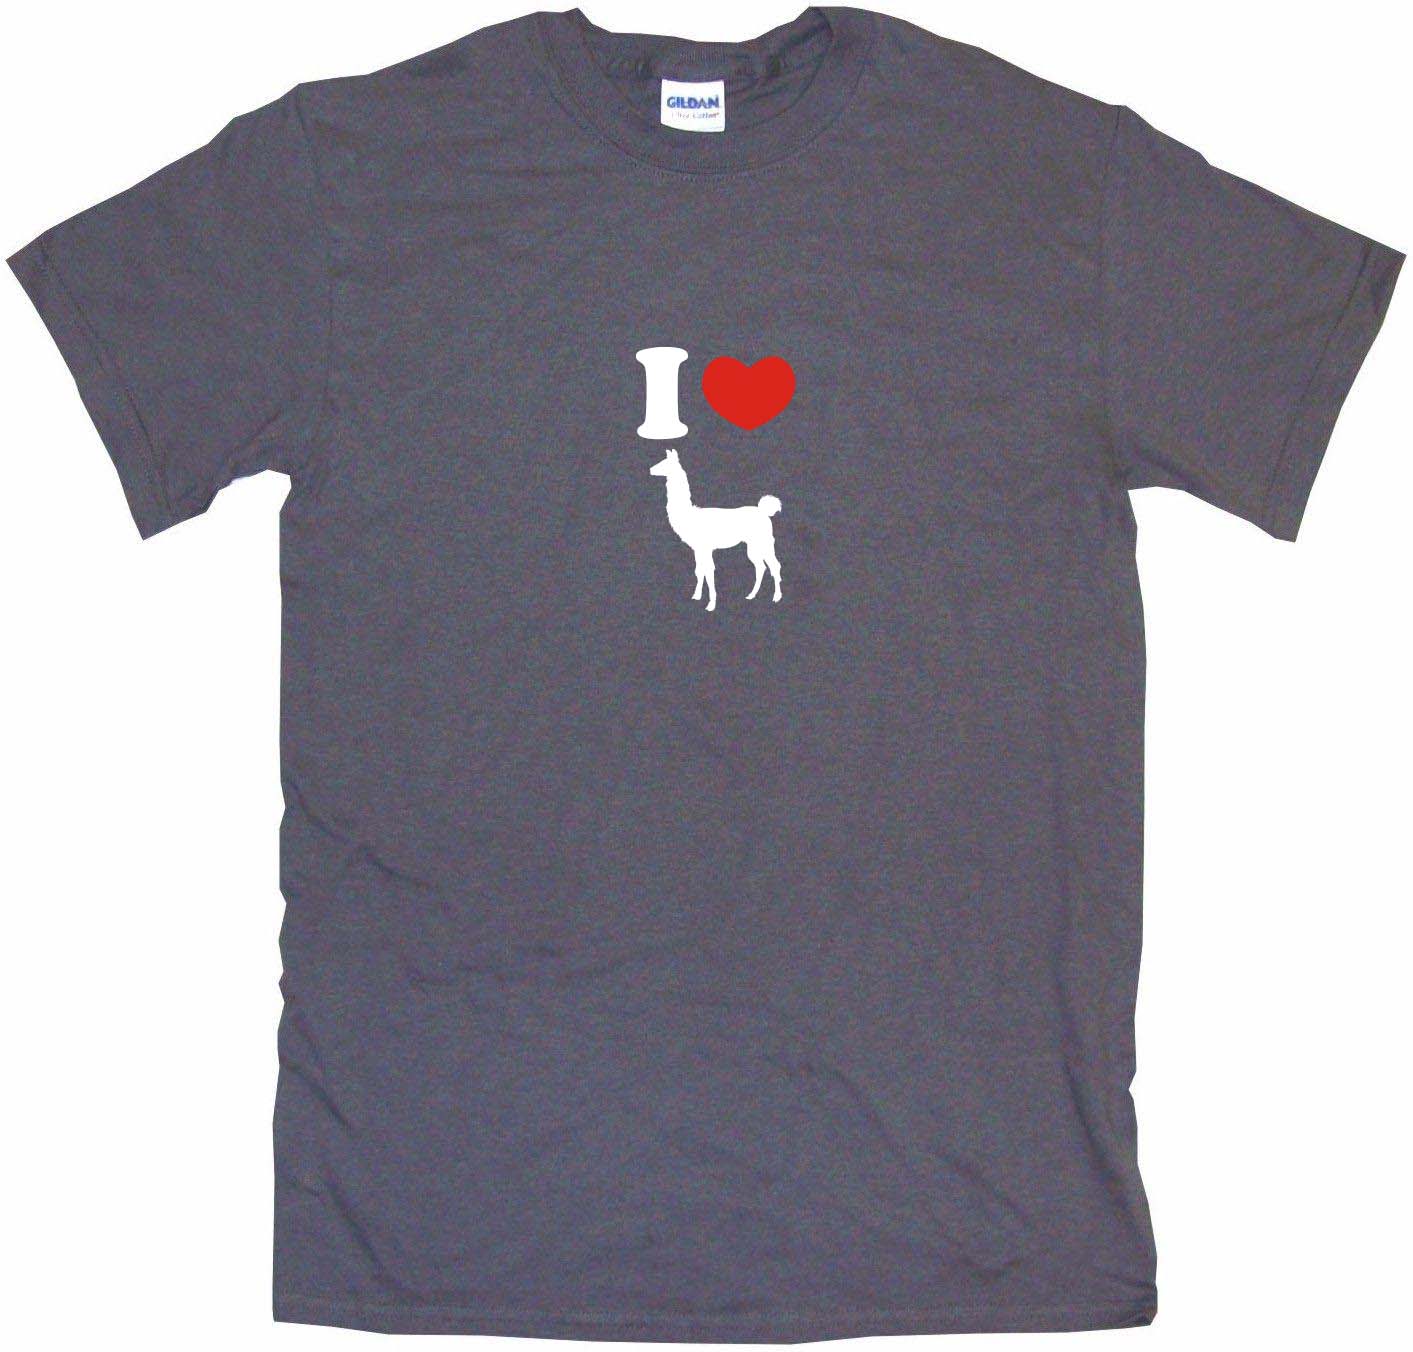 XL I Heart Love Llama Silhouette Kids Tee Shirt Pick Size & Color 2T 